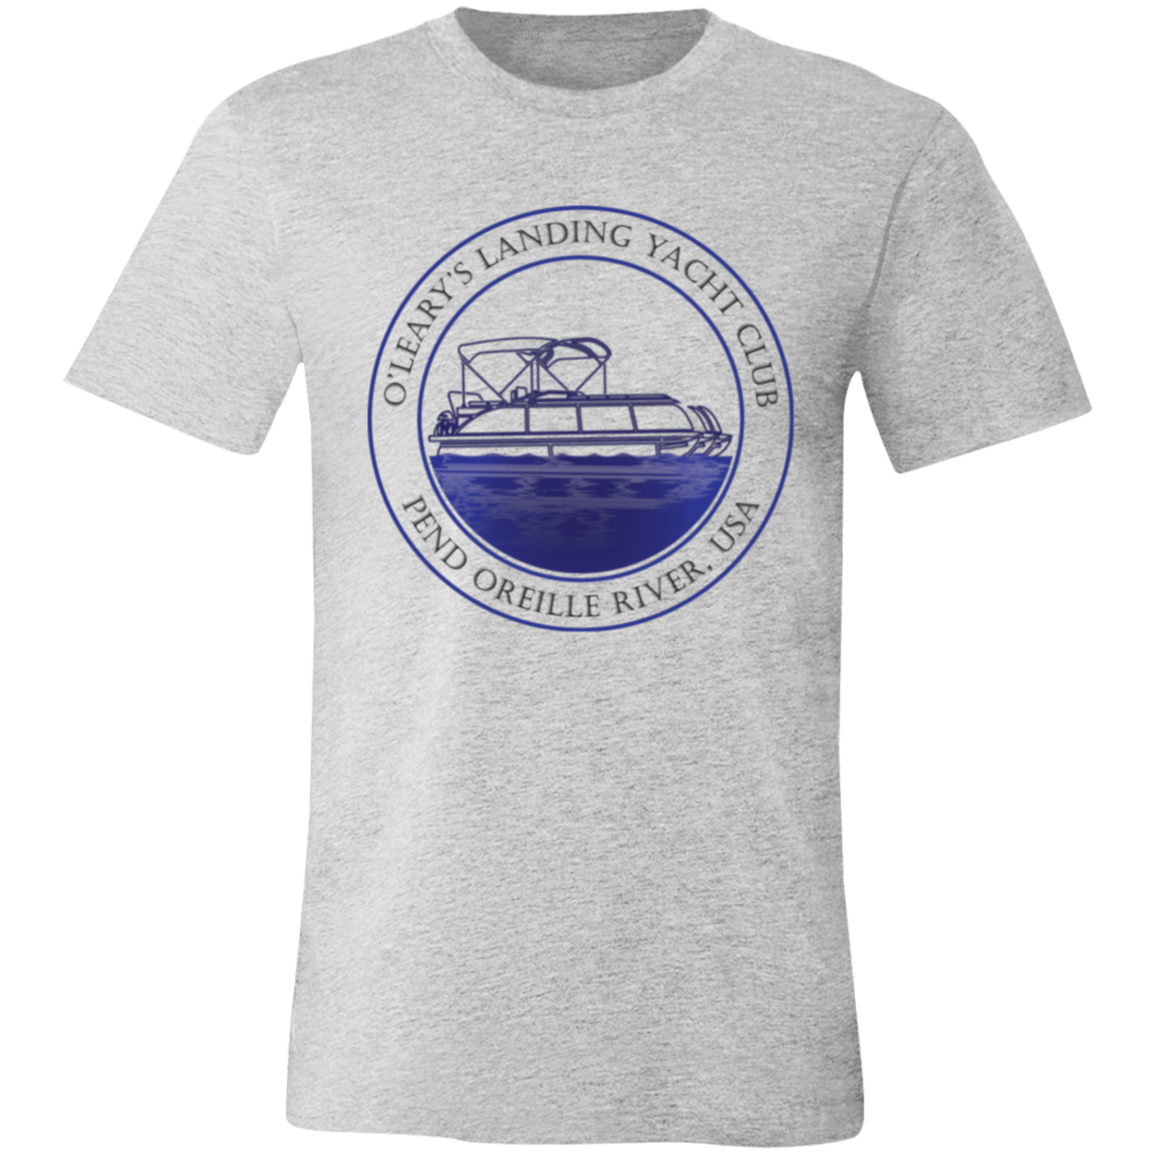 O'Leary's Landing Yacht Club - Shirt